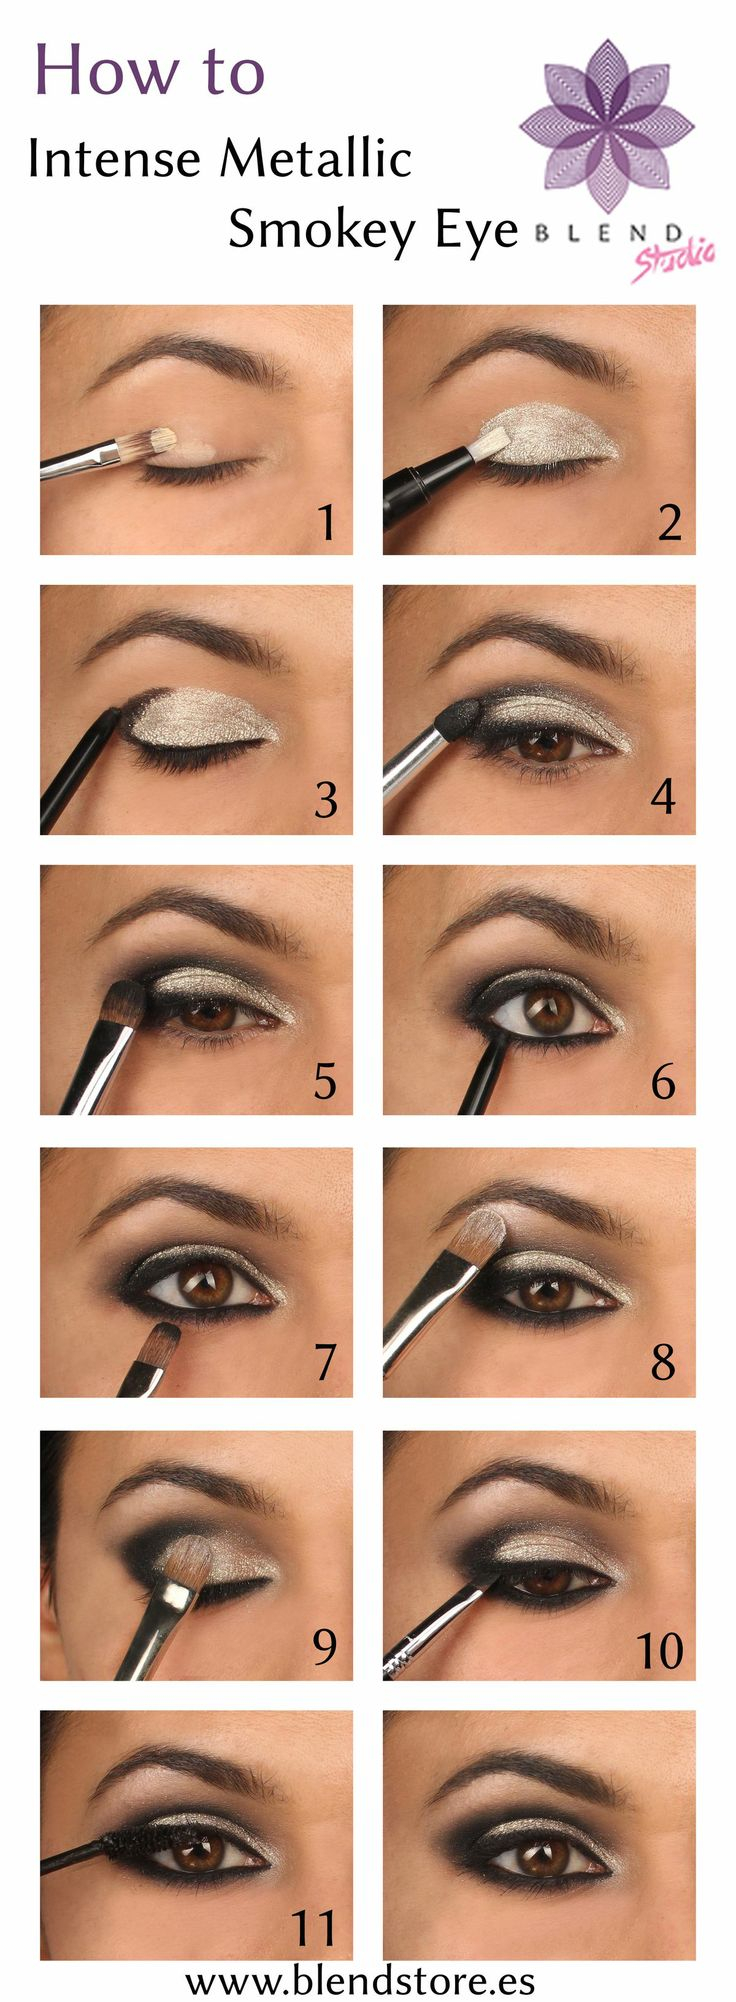 Smokey Eye Makeup Pictures 15 Smokey Eye Tutorials Step Step Guide To Perfect Hollywood Makeup